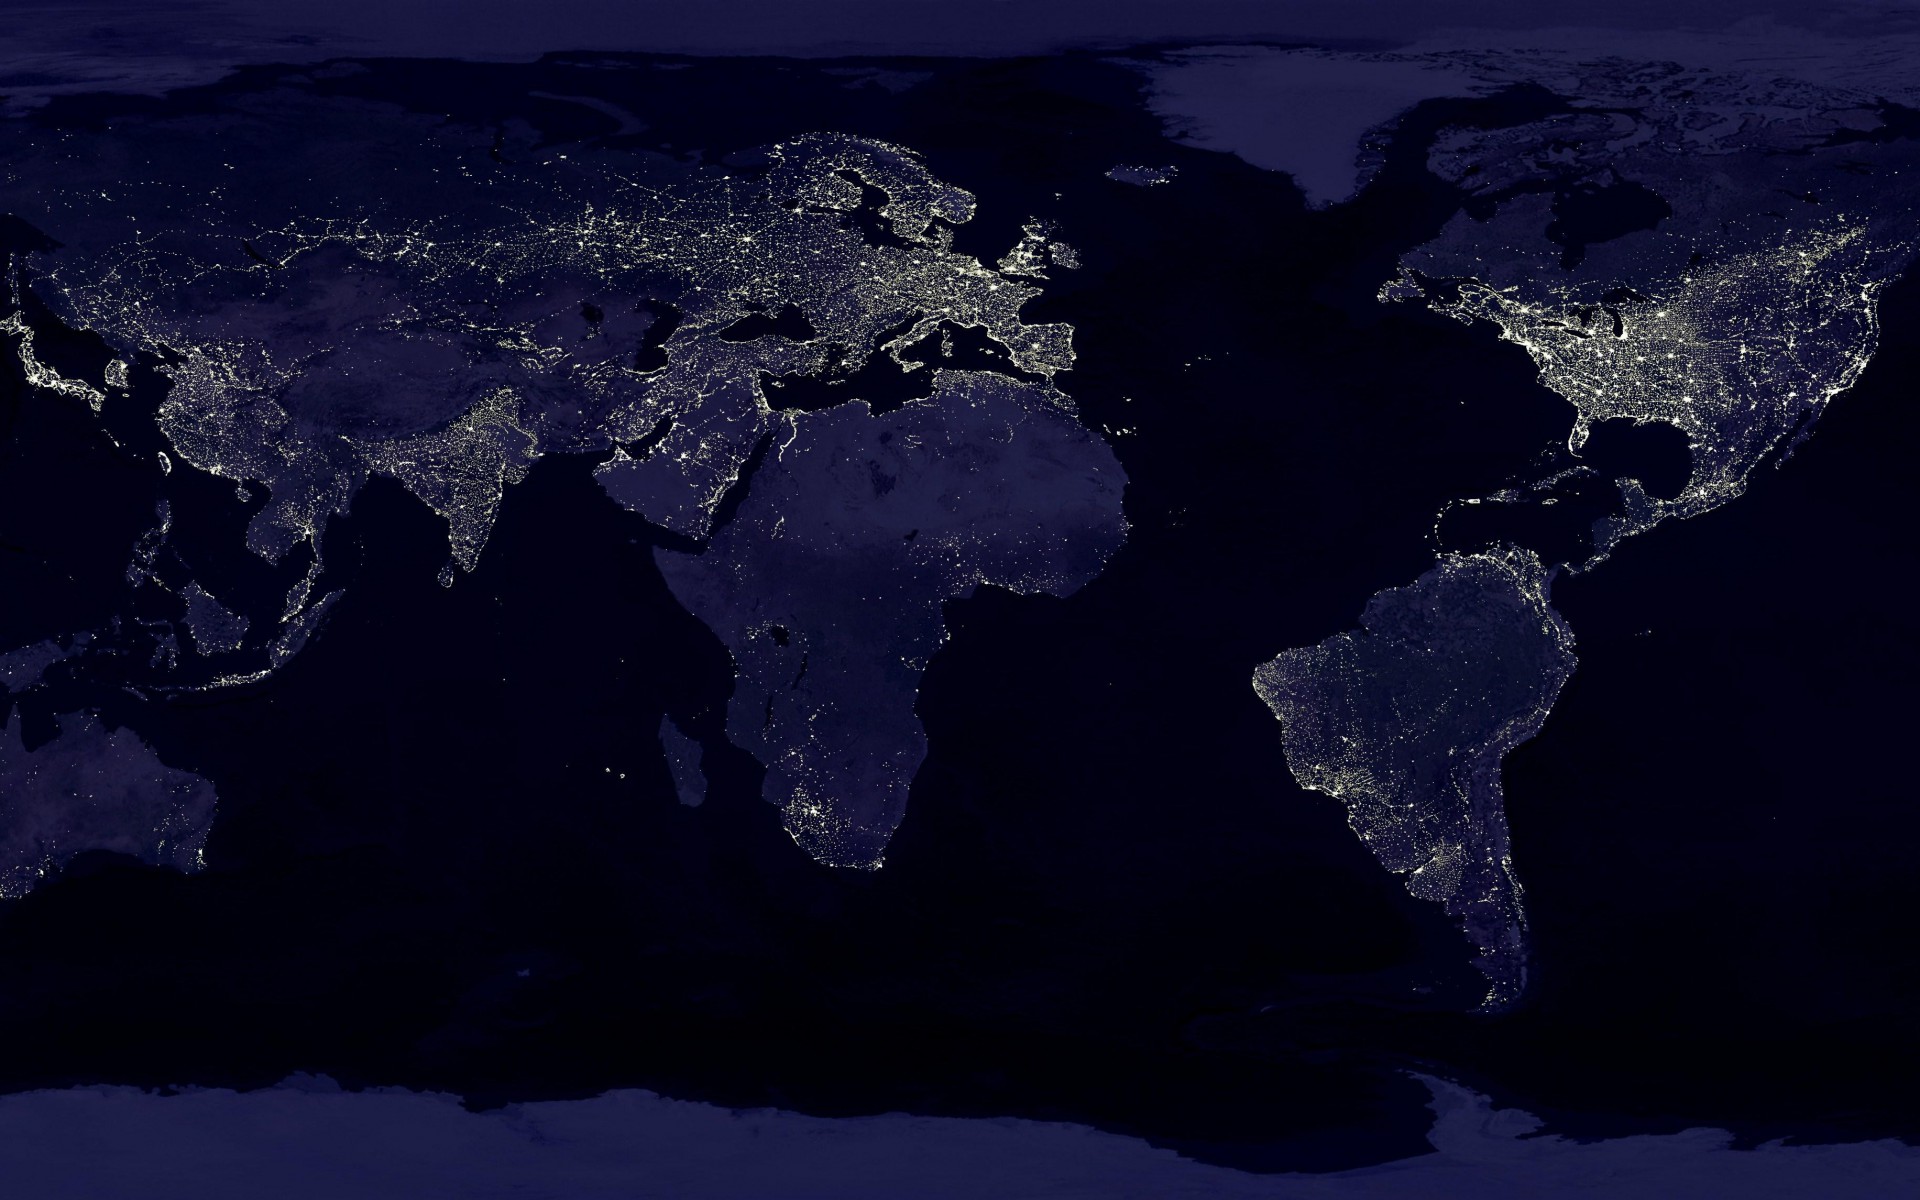 [47+] Earth at Night Desktop Wallpaper on WallpaperSafari